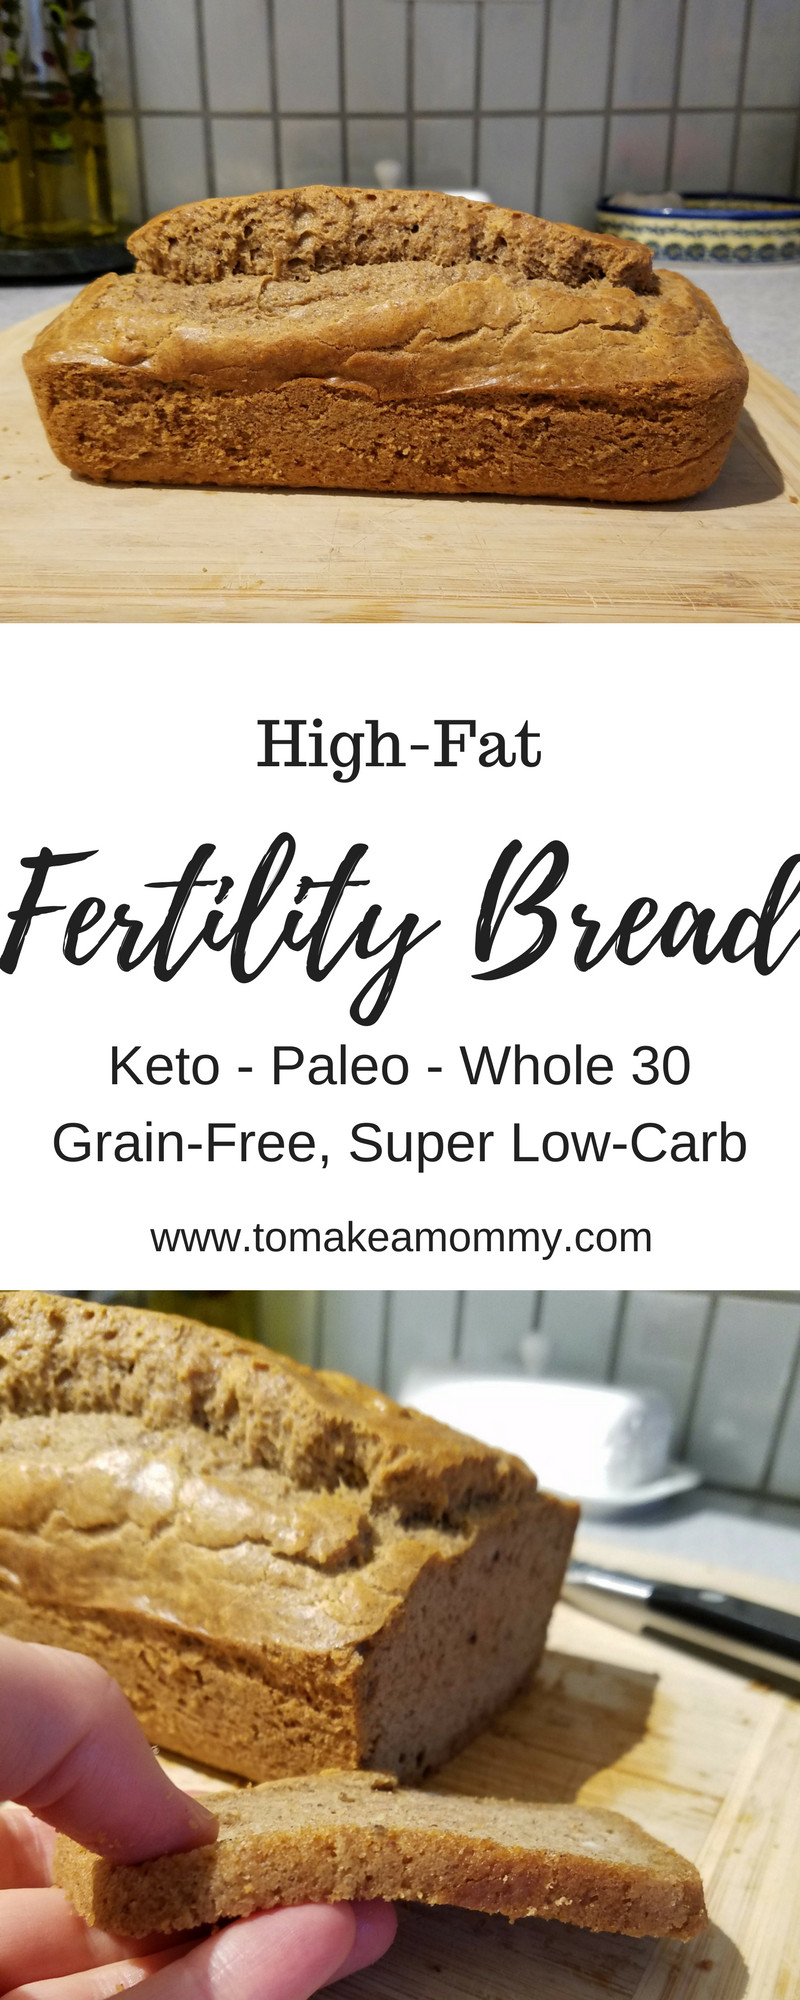 Healthy Life Low Carb Bread
 High Fat Fertility Bread Recipe Keto Paleo Whole 30